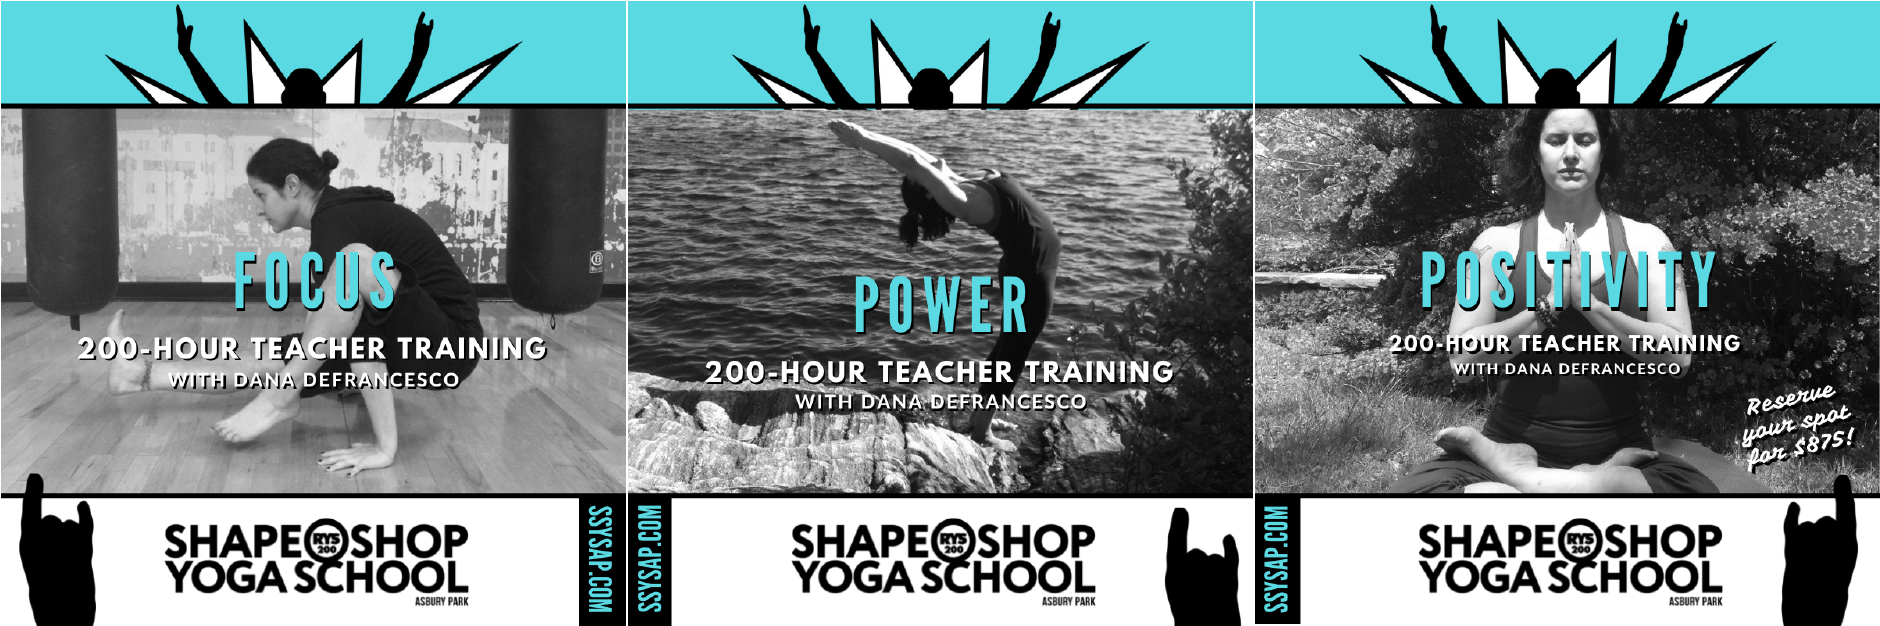 Shape Shop Yoga Instagram posts